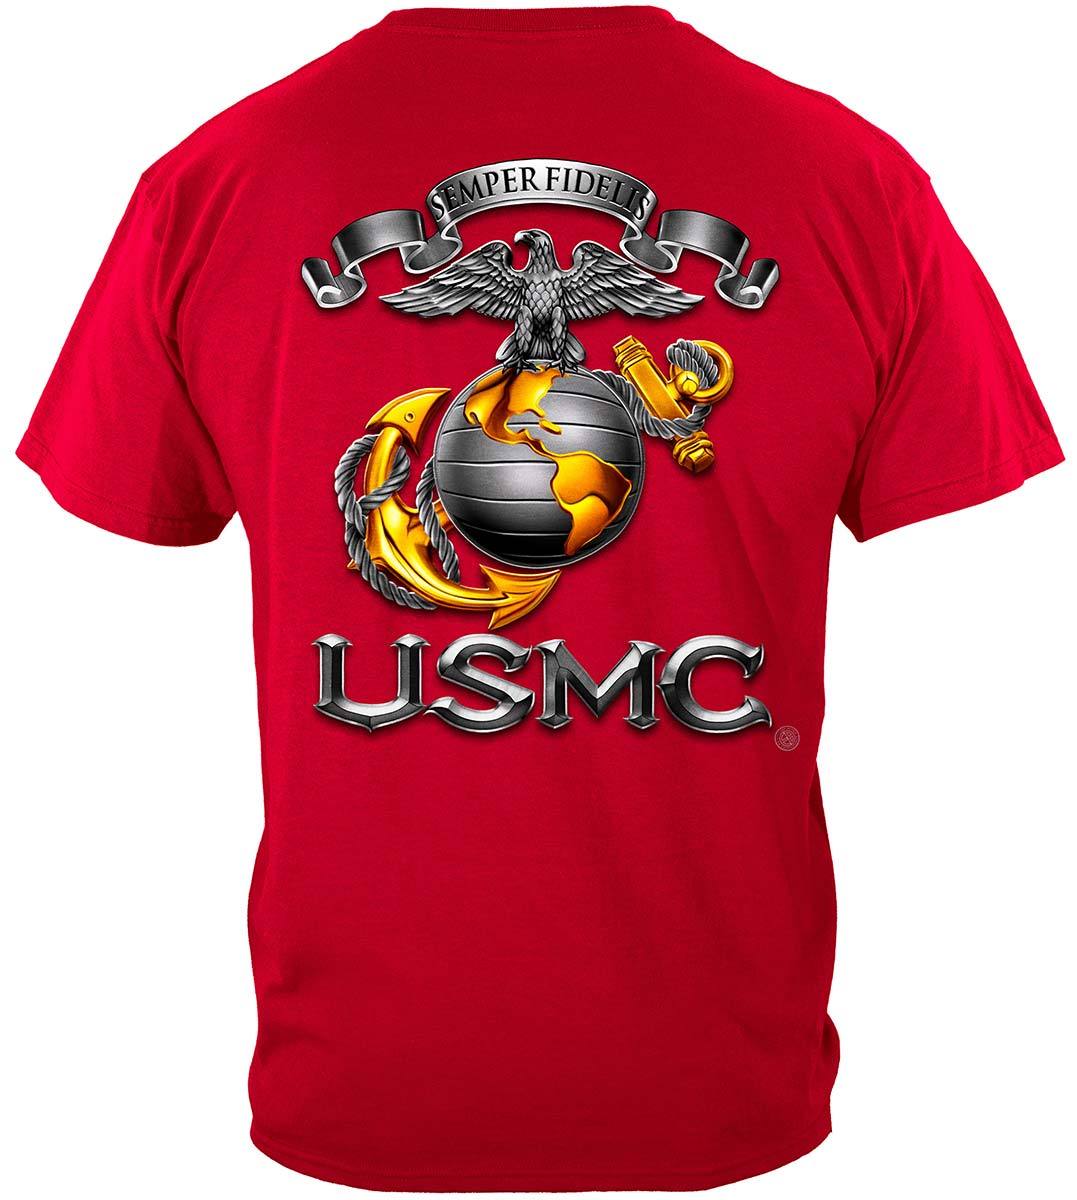 USMC-Semper Fidelis Premium Hooded Sweat Shirt